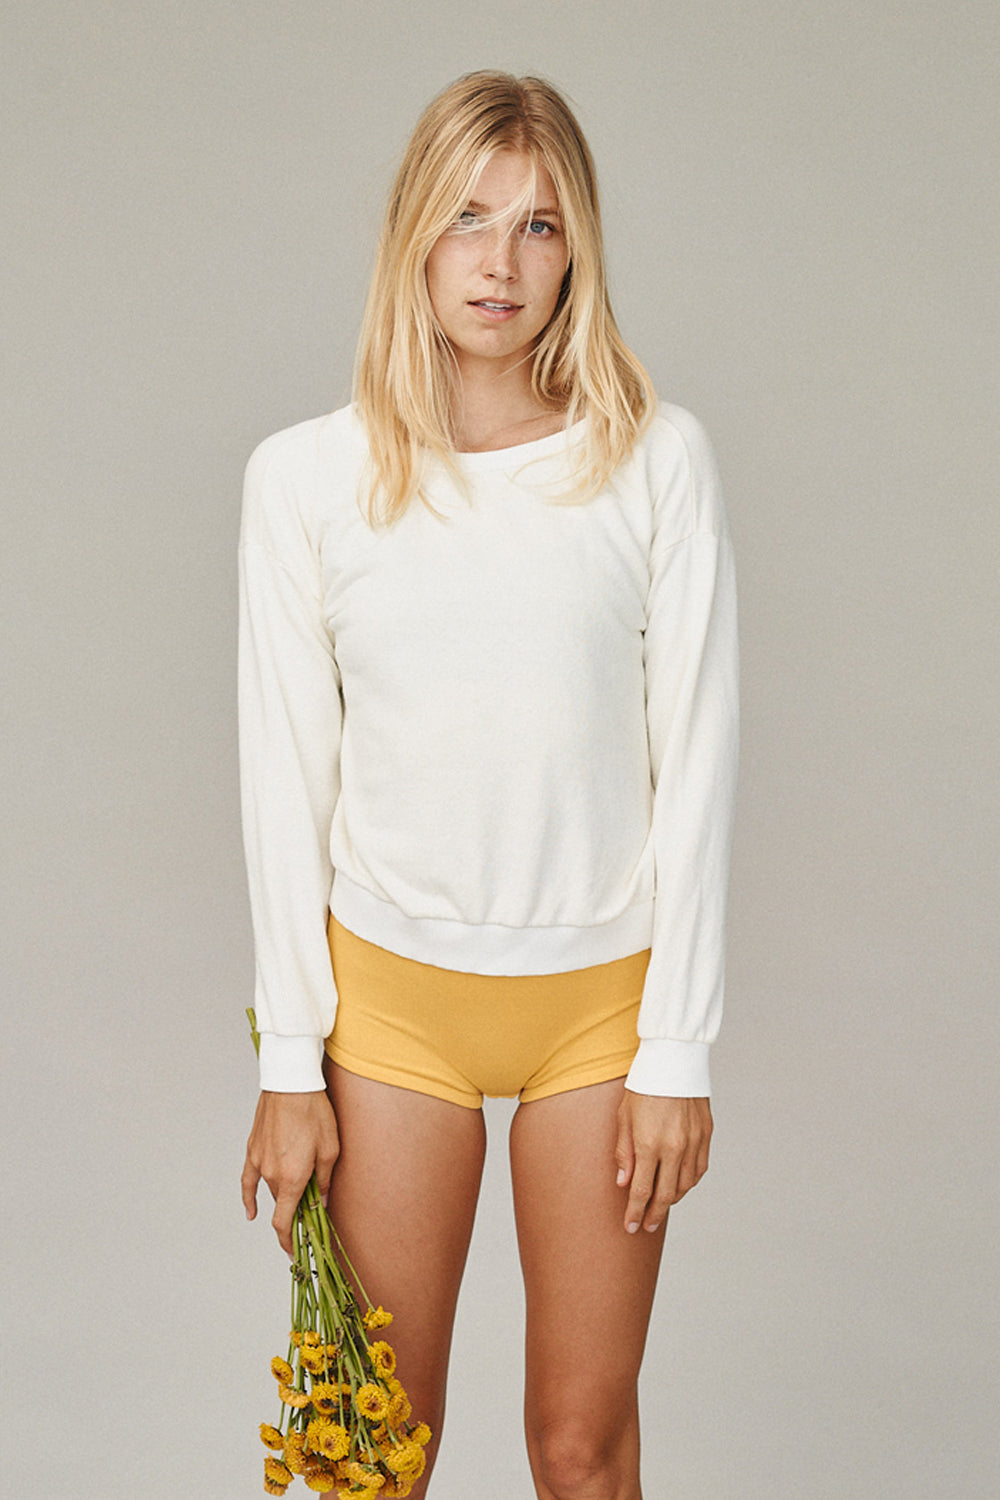 Cruz Cropped Sweatshirt | Jungmaven Hemp Clothing & Accessories / model_desc: Stephanie is 5’9” wearing XS